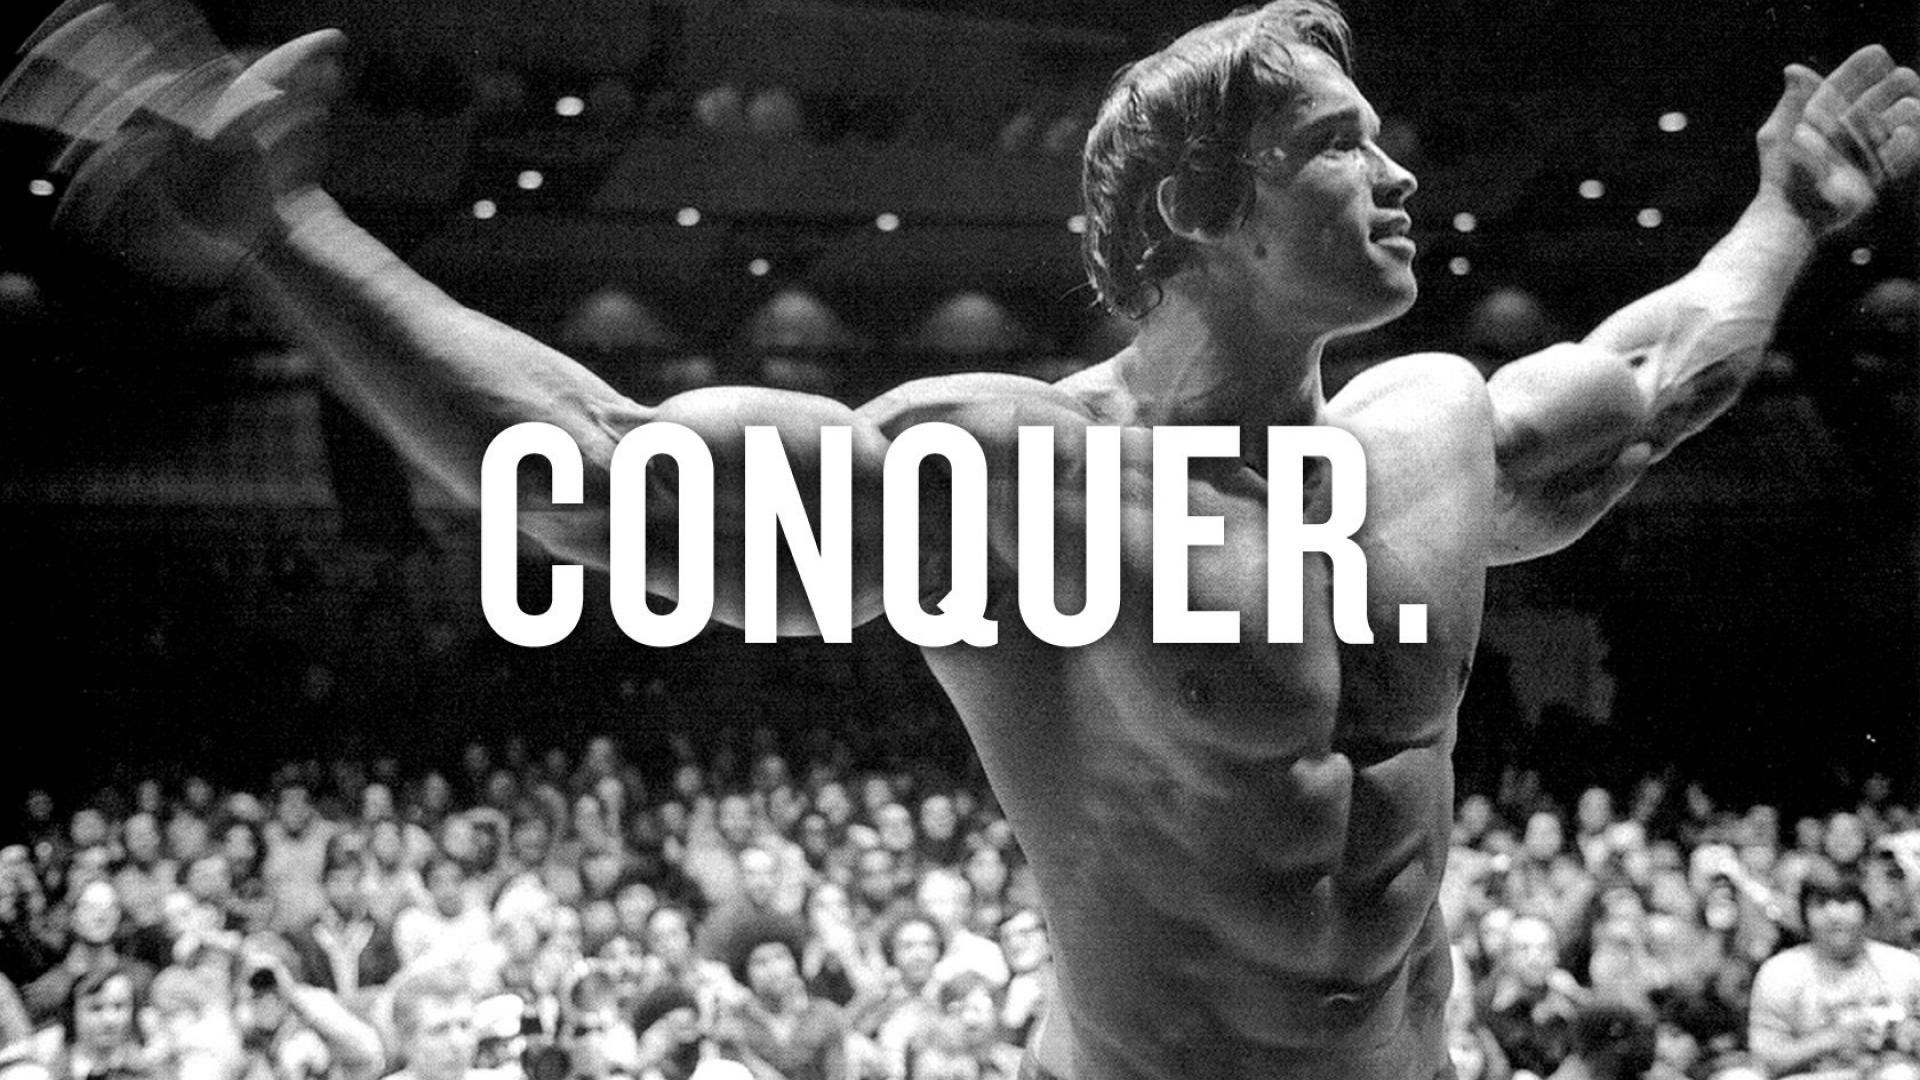 1920x1080 Calisthenics Motivational Video "Conquer" HD